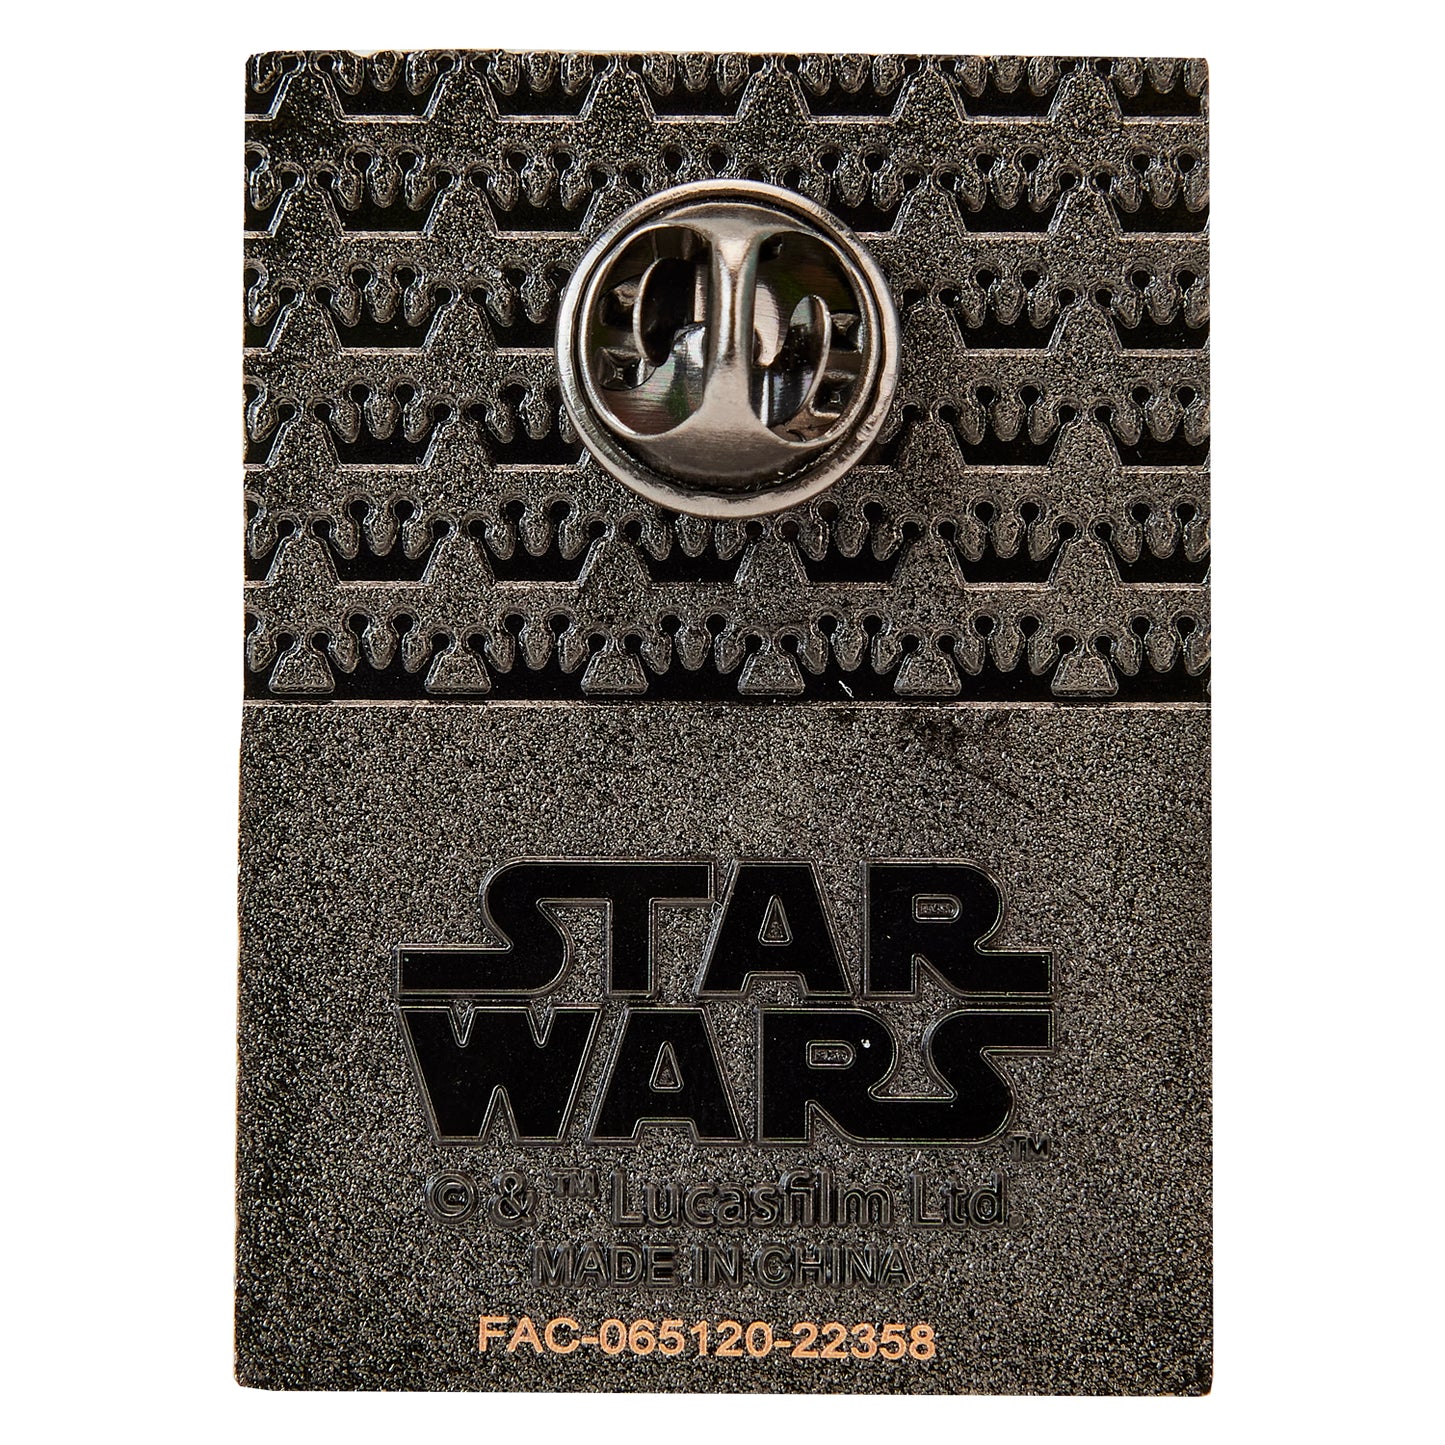 Star Wars™ Return of the Jedi™ 40th Anniversary International Posters Blind Box Pins